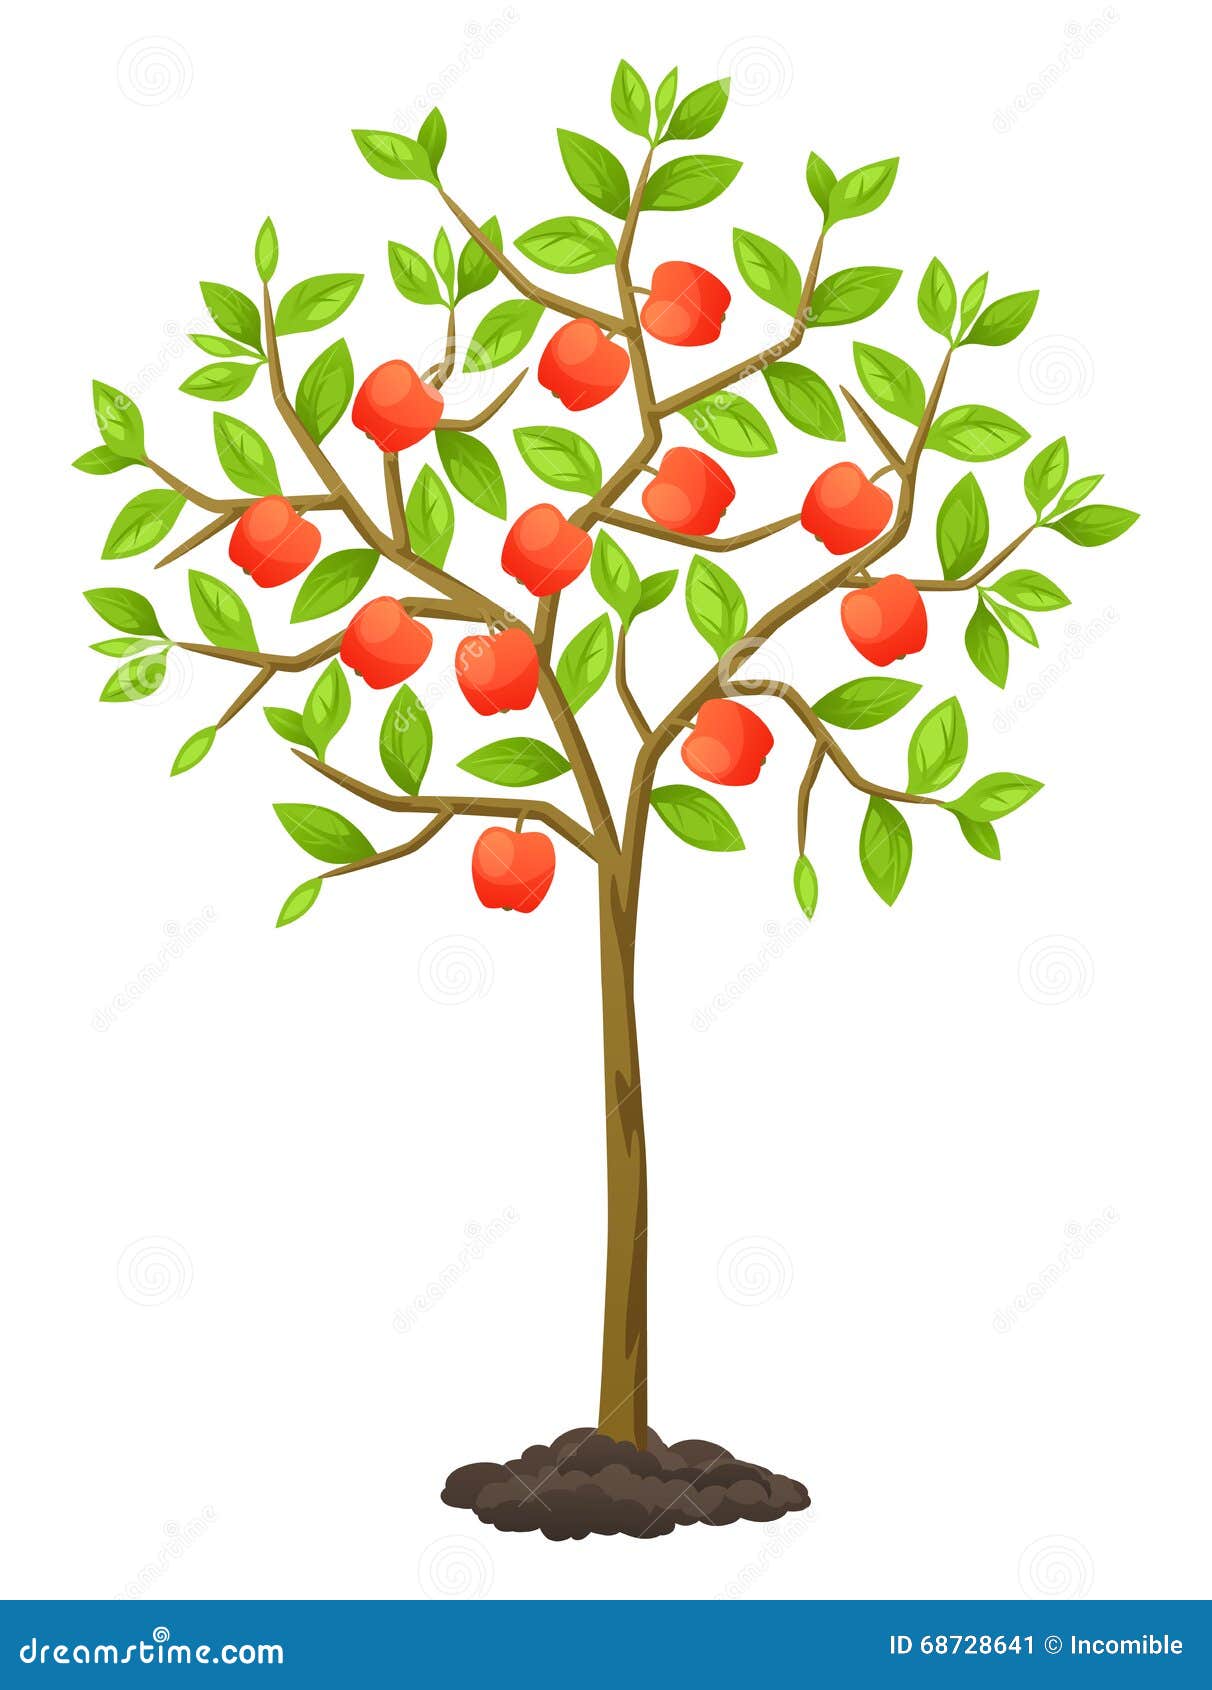 44900 Fruit Tree Illustrations RoyaltyFree Vector Graphics  Clip Art   iStock  Apple tree Fruit tree in garden Orchard